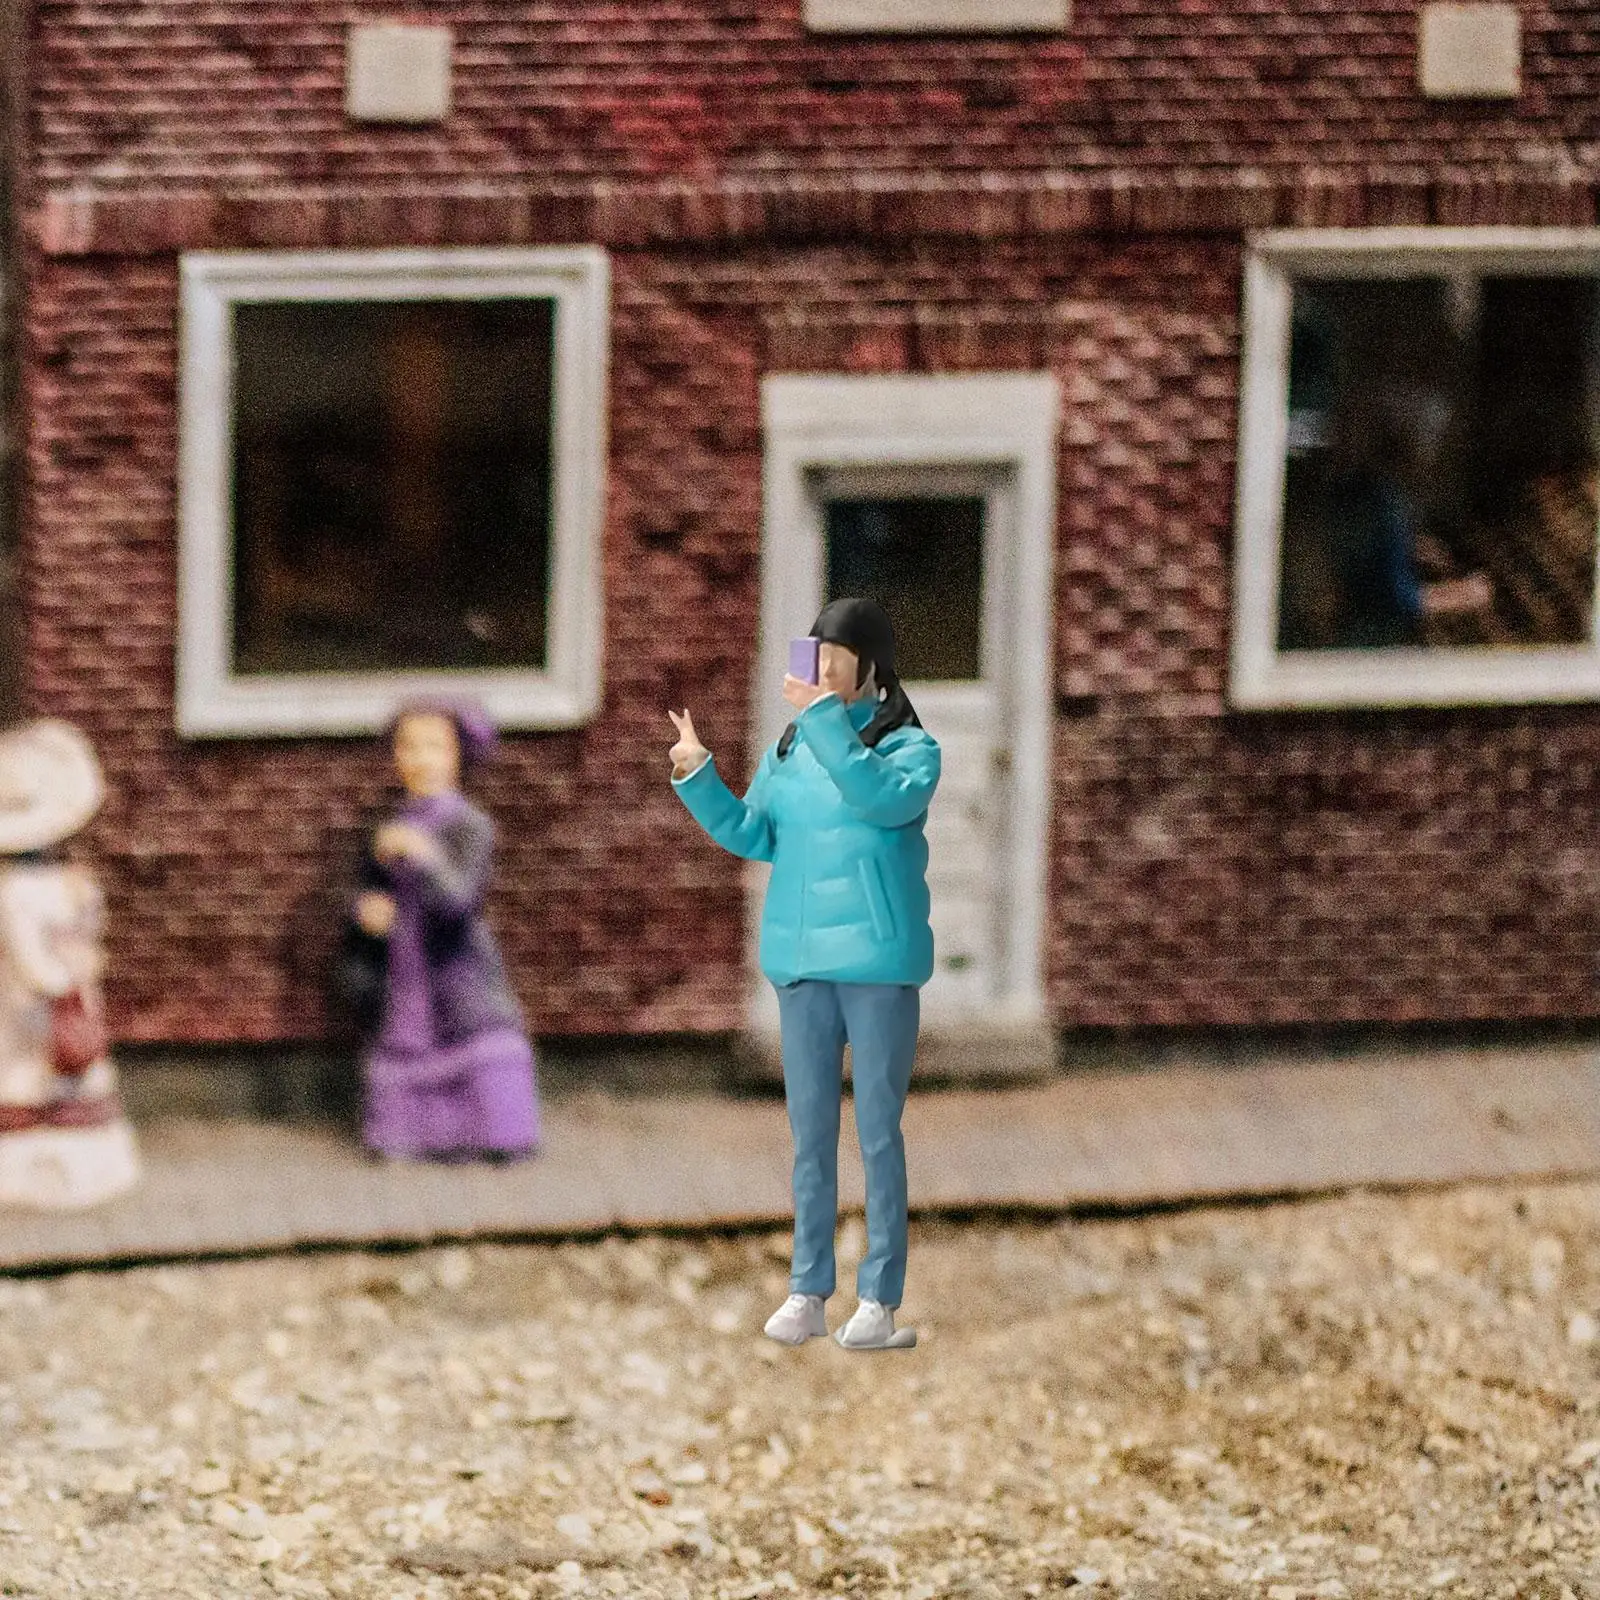 1/64 People Figures Miniature People Figurines Down Jacket Girl Hand Painted DIY Crafts for Miniature Scene Diorama Decor